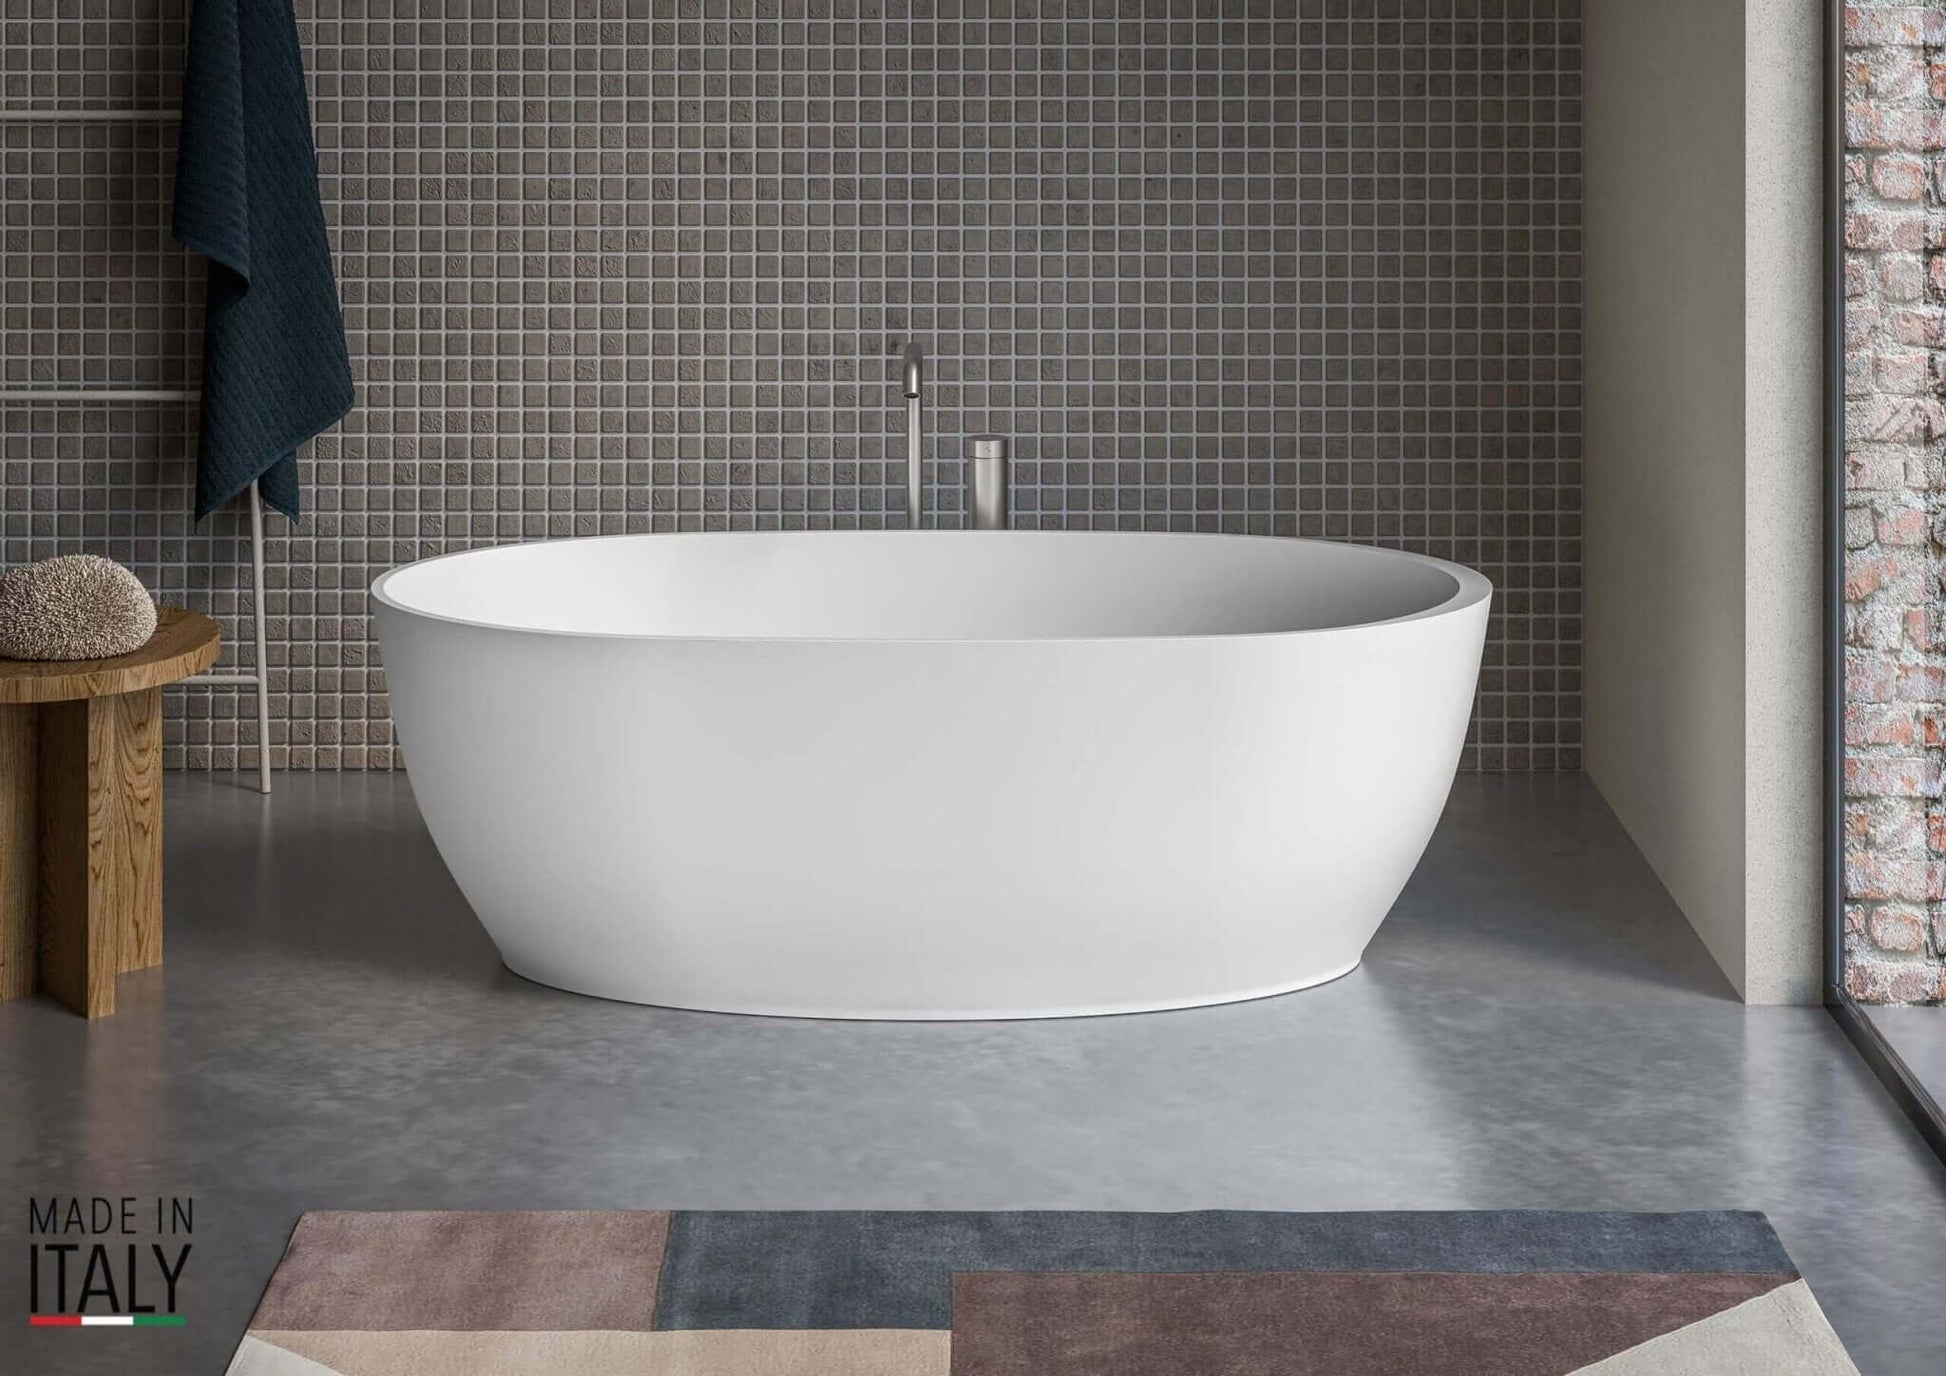 Ruvati Matte White Oval Freestanding Canali Bath Tub - in Designer Bathroom